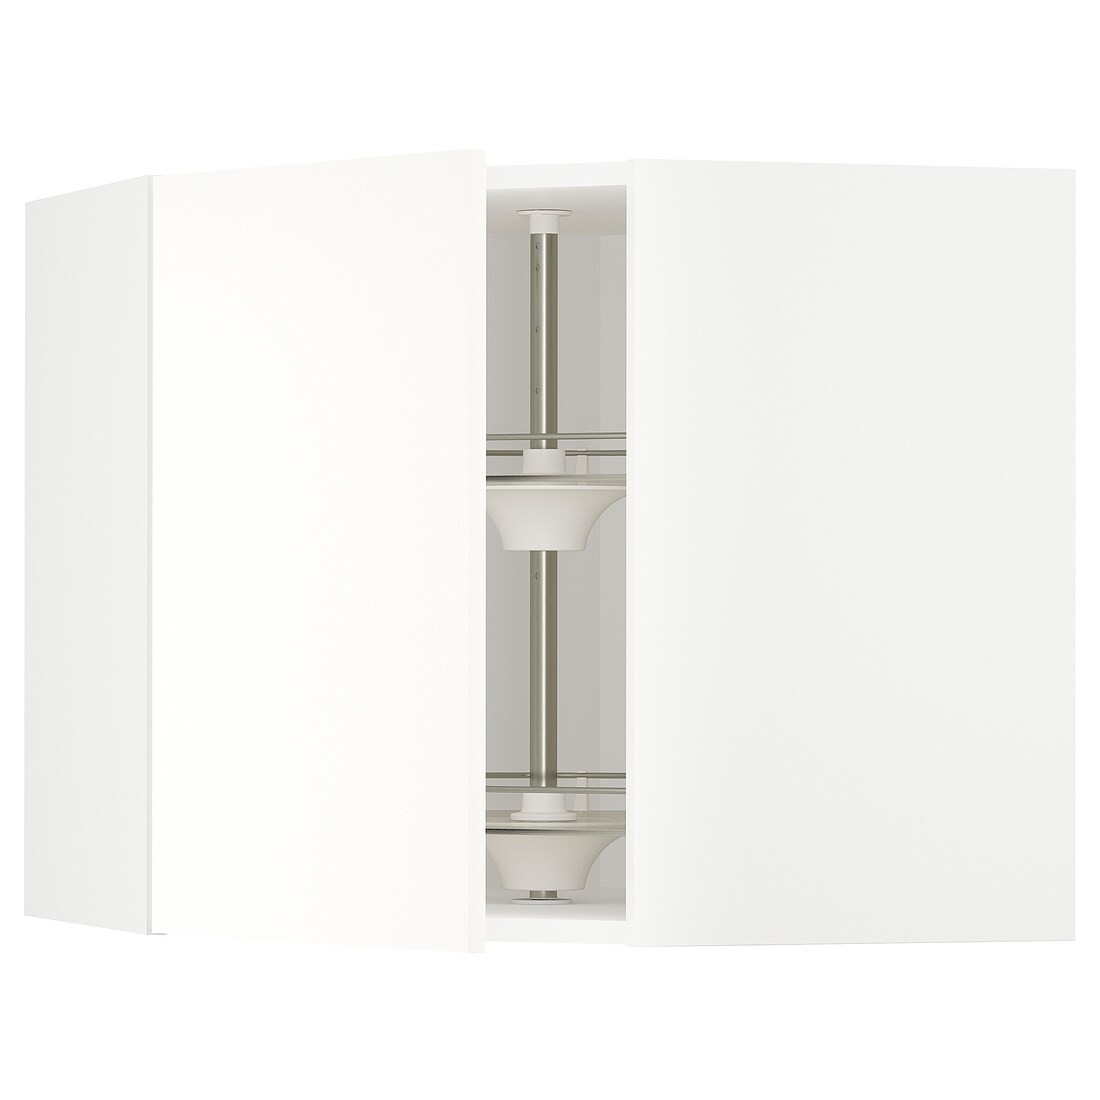 IKEA METOD МЕТОД Угловой навесной шкаф с каруселью, белый / Vallstena белый 79507398 795.073.98